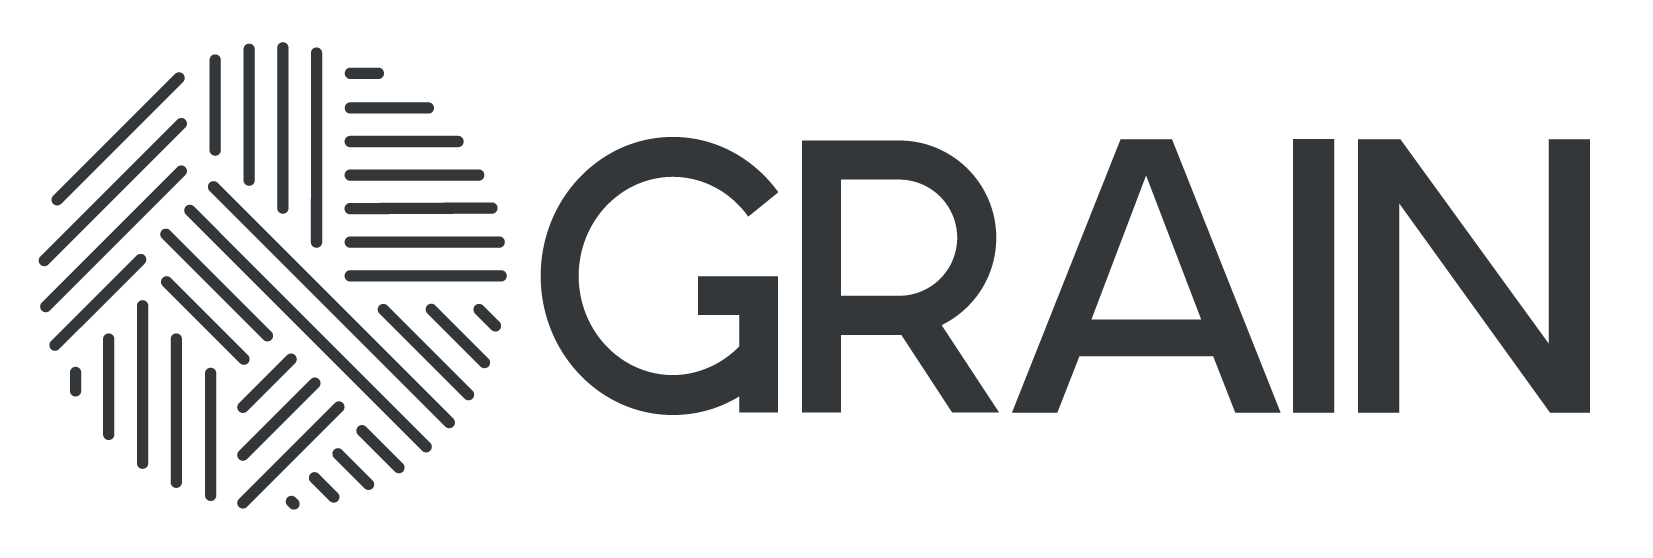 logo for Wilder Creative & Grain Ltd